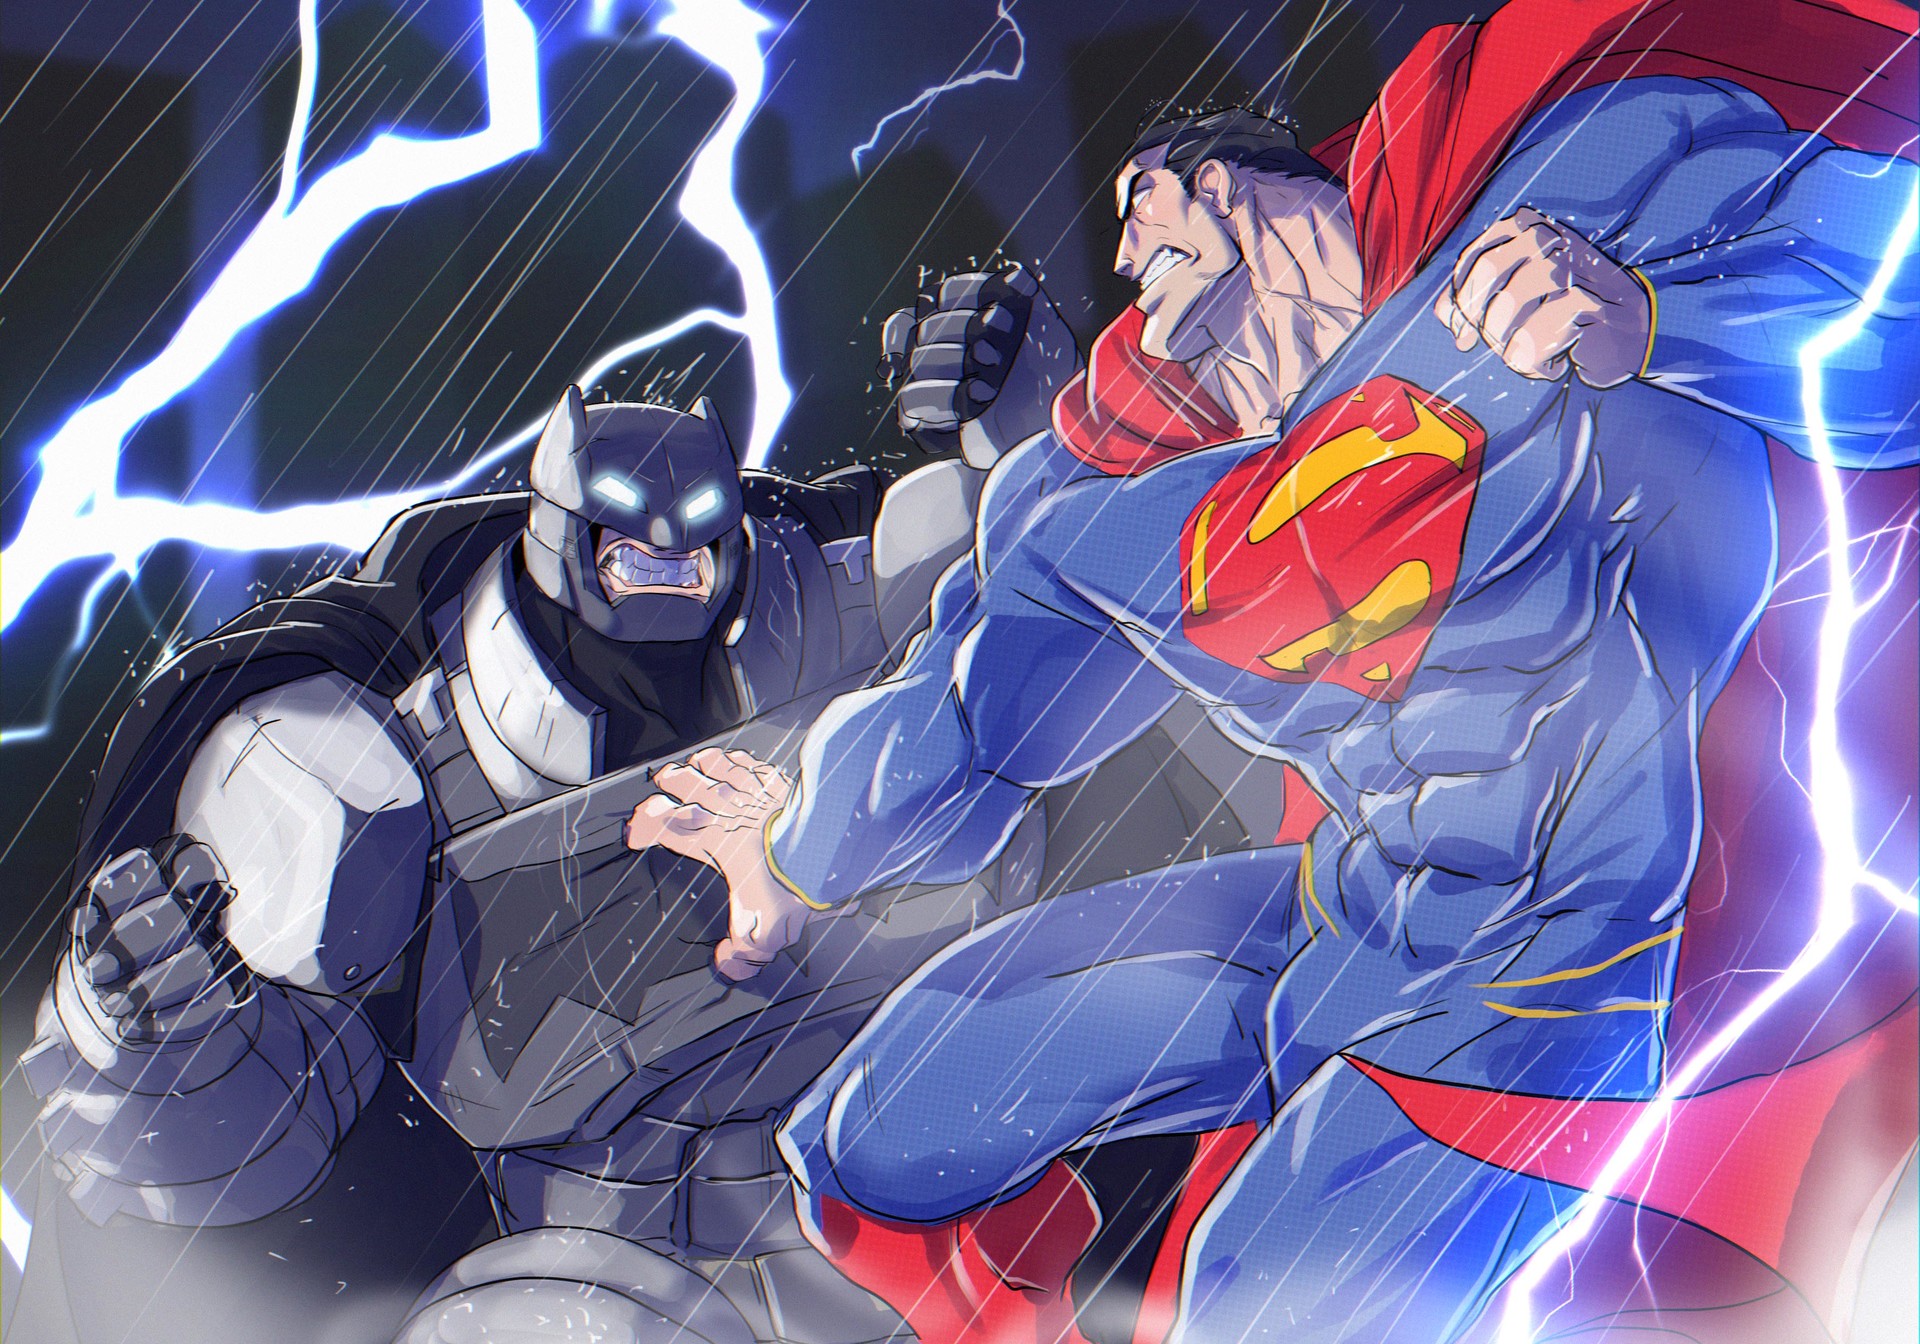 ArtStation - superman vs batman, Eslam AboShady